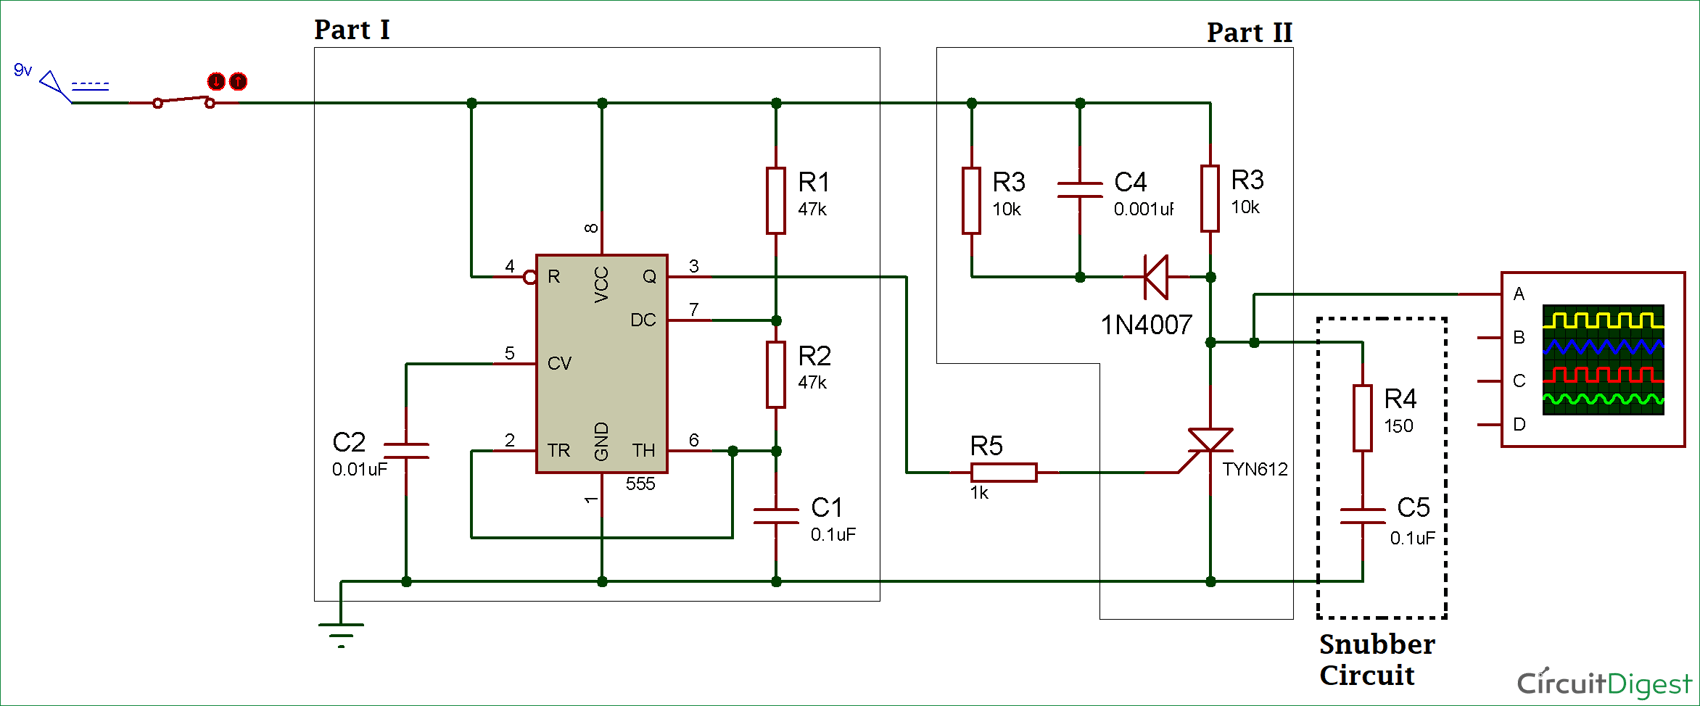 Thyristor Switching Circuit diagram using Snubber